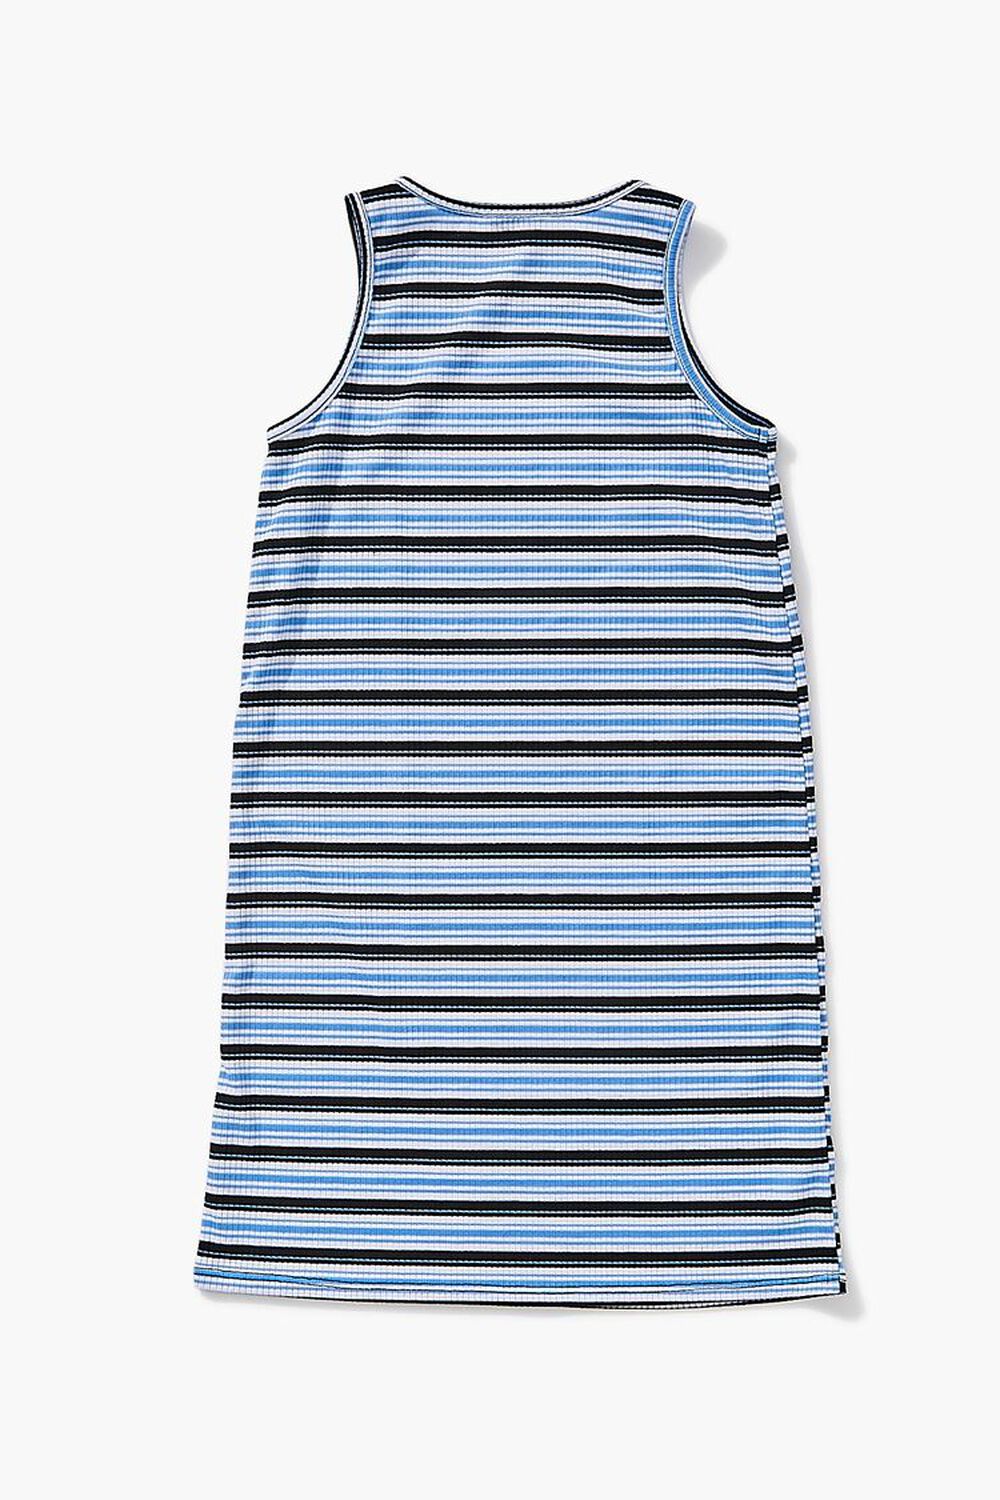 BLUE/MULTI Girls Striped Tank Dress (Kids), image 2